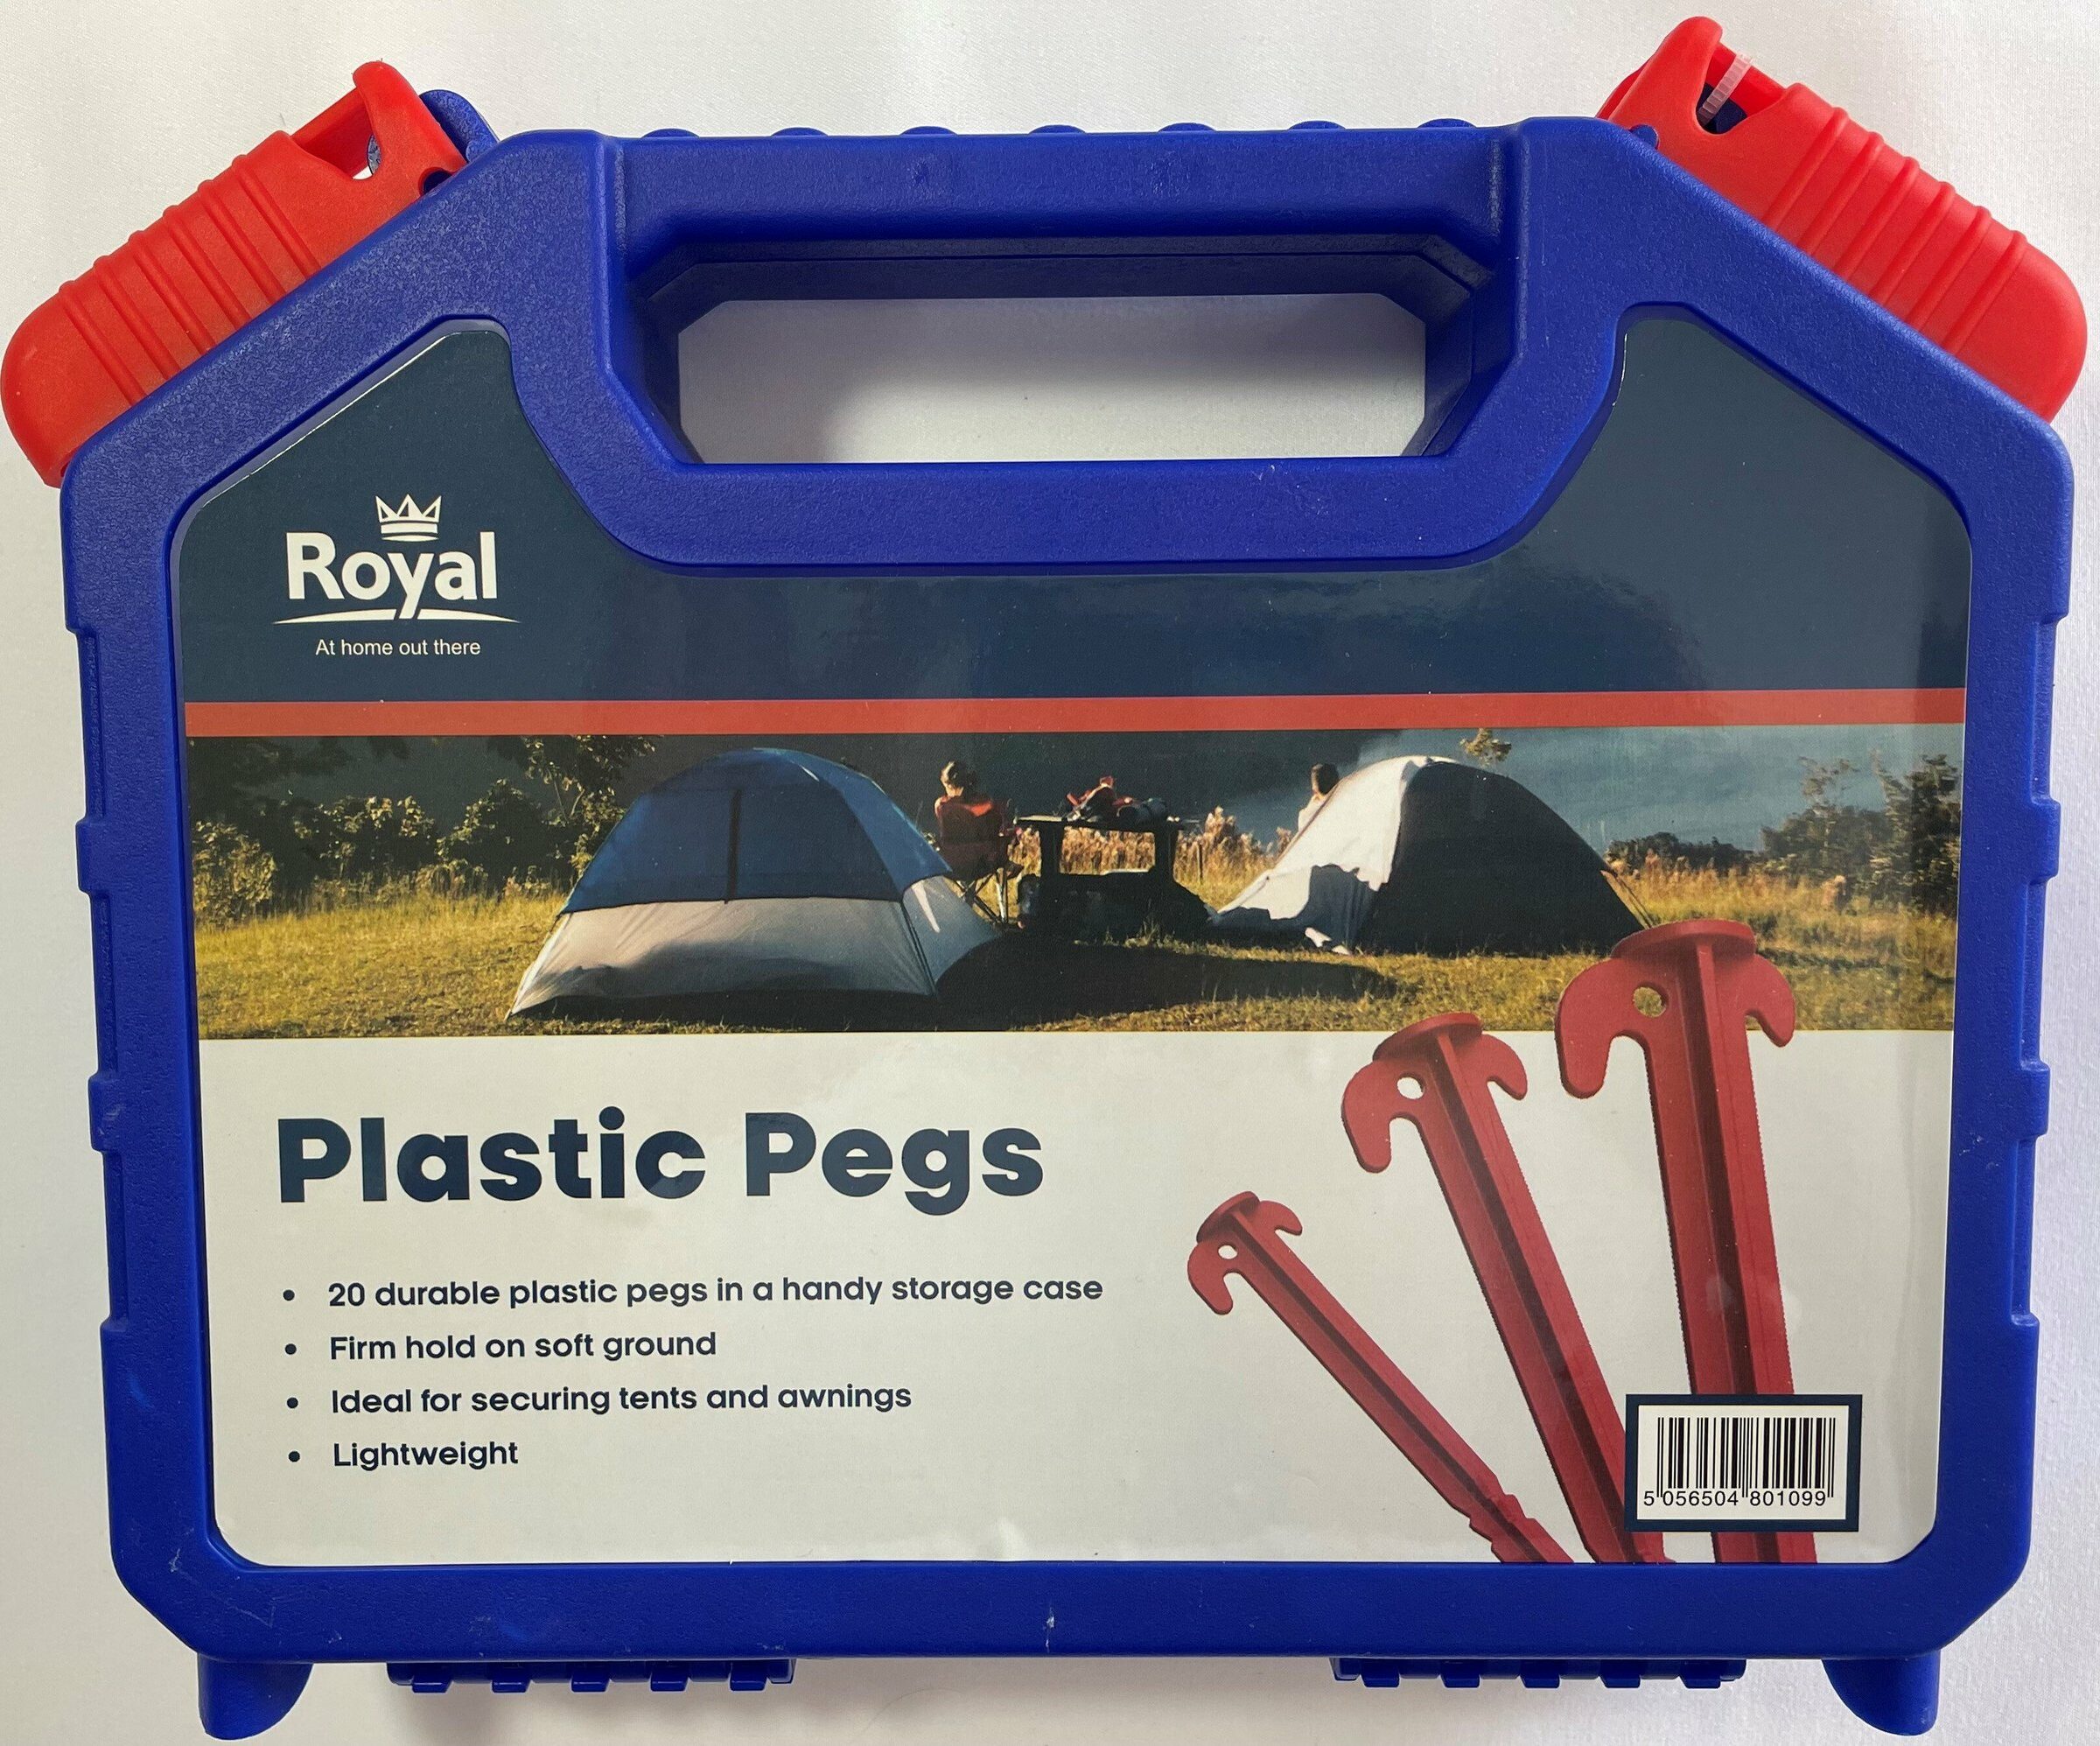 Royal Plastic Peg Case